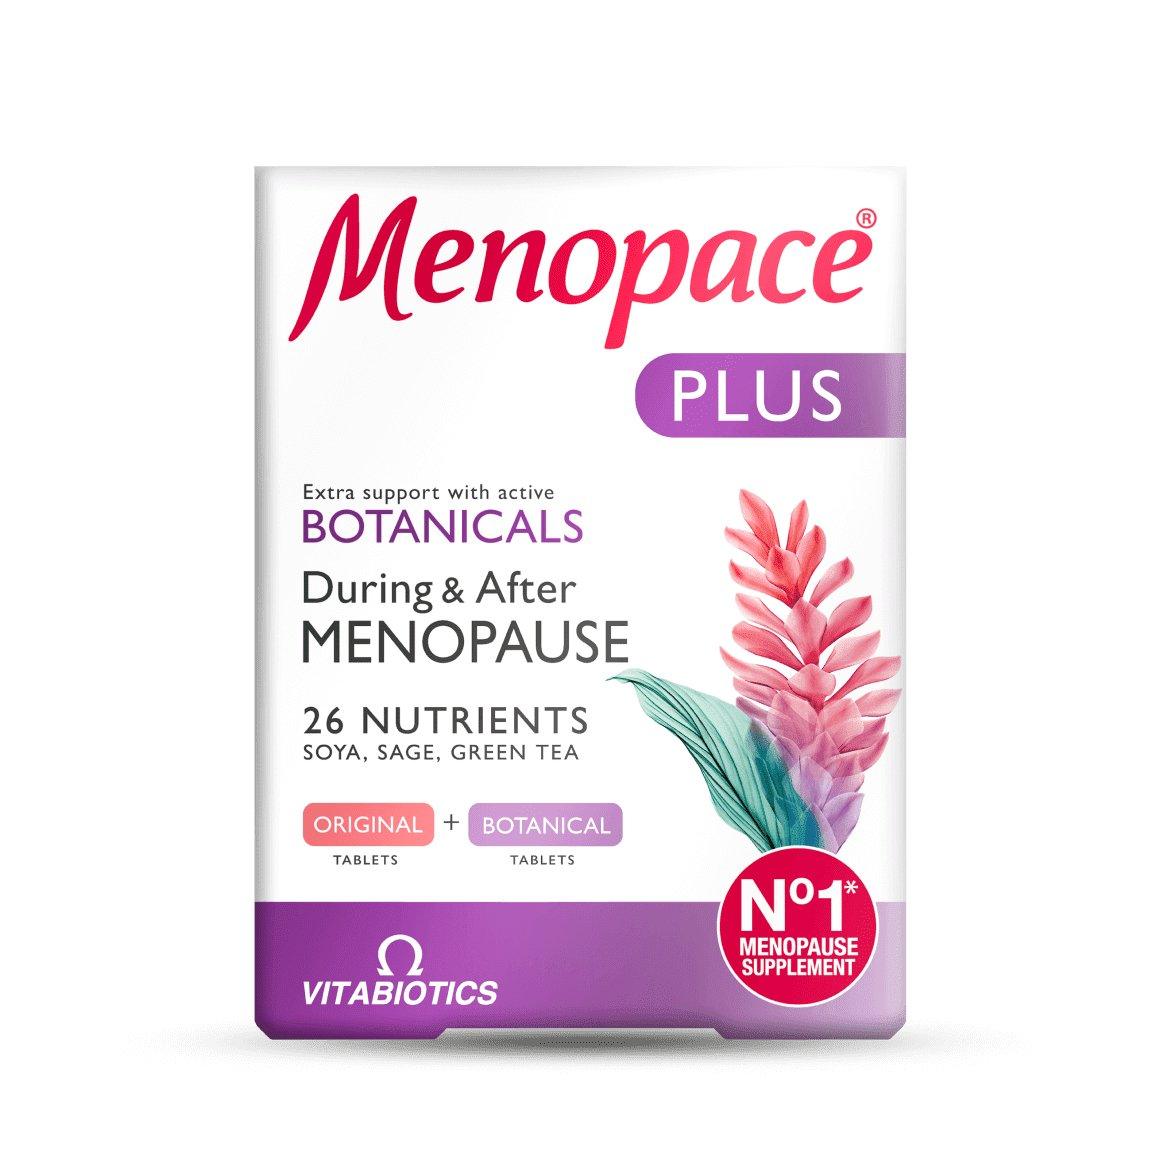 Menopace plus - Rightangled